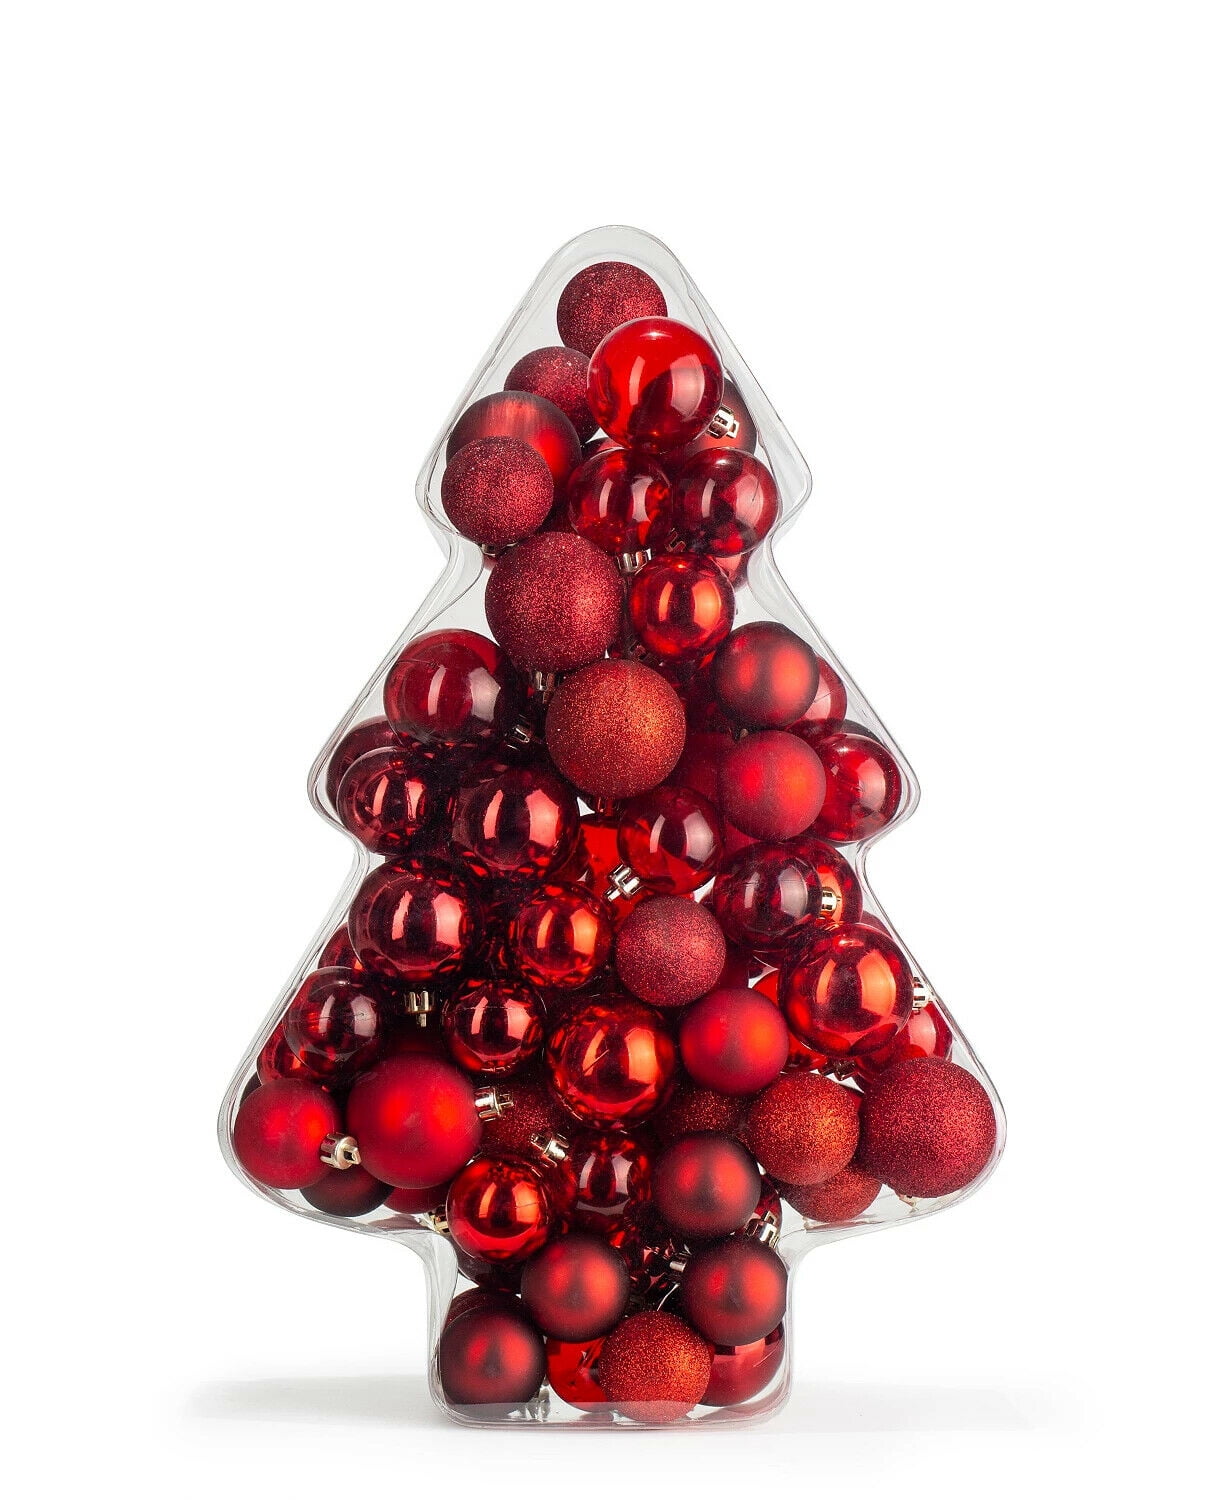 AuldHome Jingle Bell Greenery Picks (Silver, Set of 3); Modern Farmhouse  Style Christmas Tree Swirl Sprays